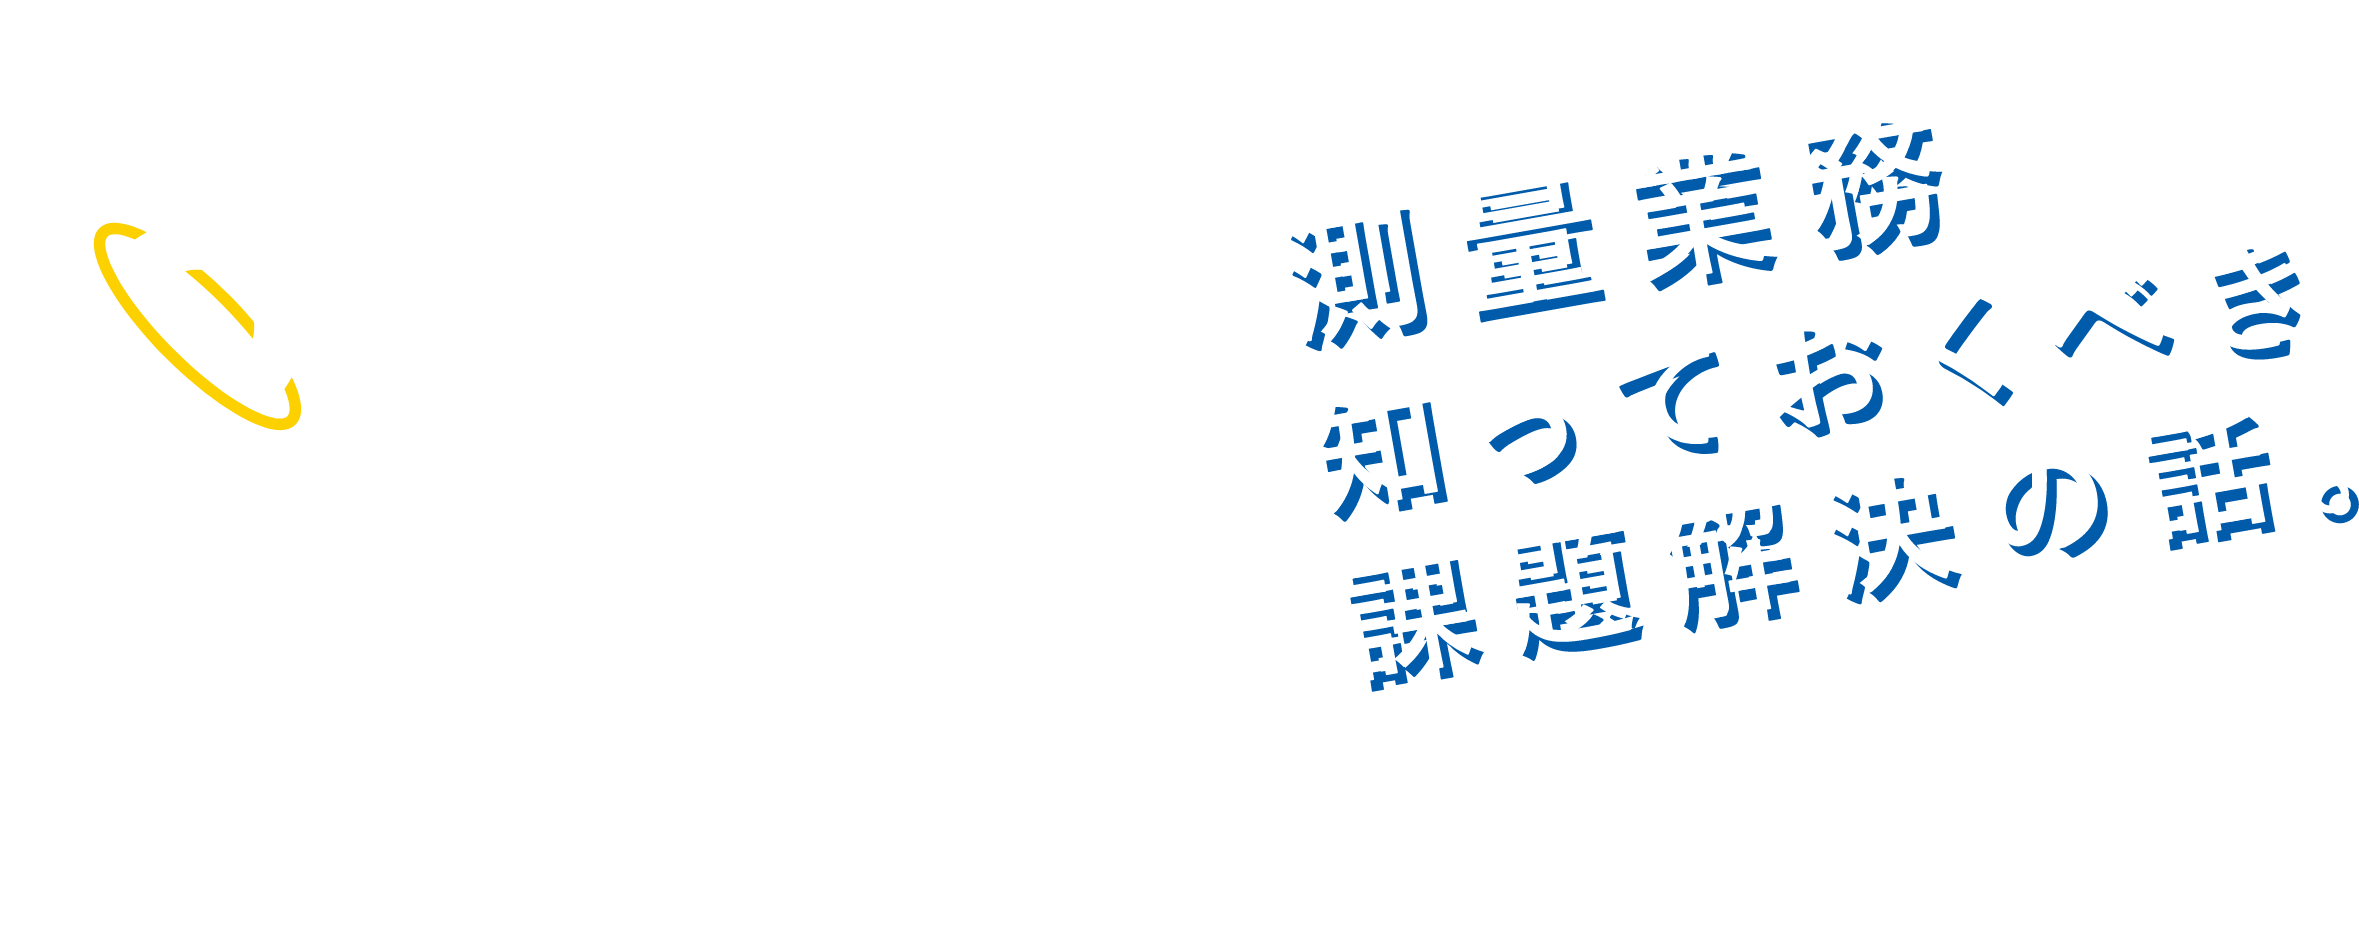 AISAN ONLINE FAIE 2022 12/7(水)〜9(金) 開催時間10:00~18:00 参加無料 測量業務知っておくべき 課題解決の話。